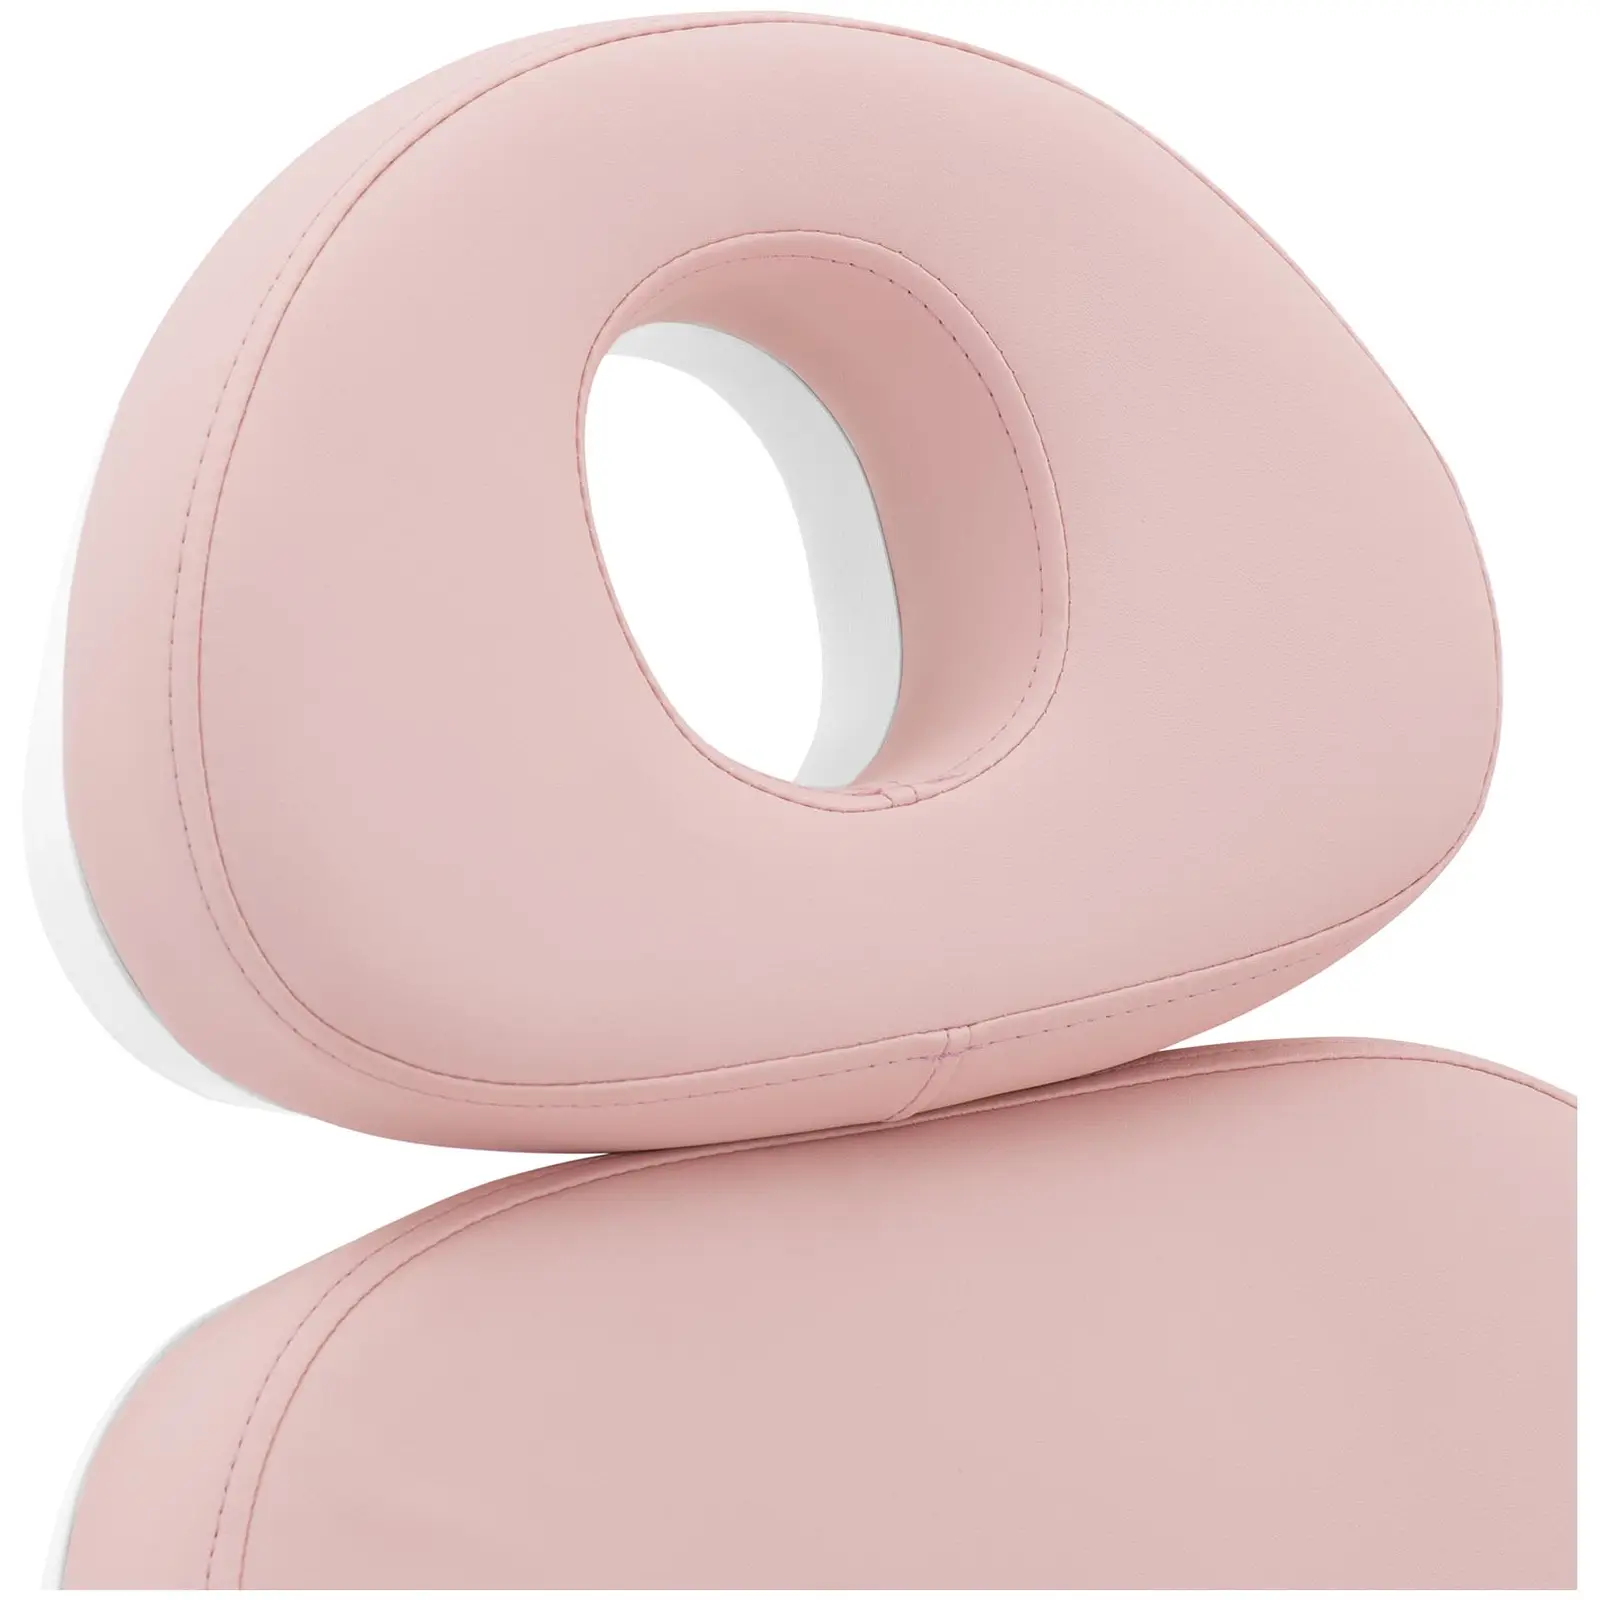 Kosmetikliege - 200 W - 150 kg - Pink, White